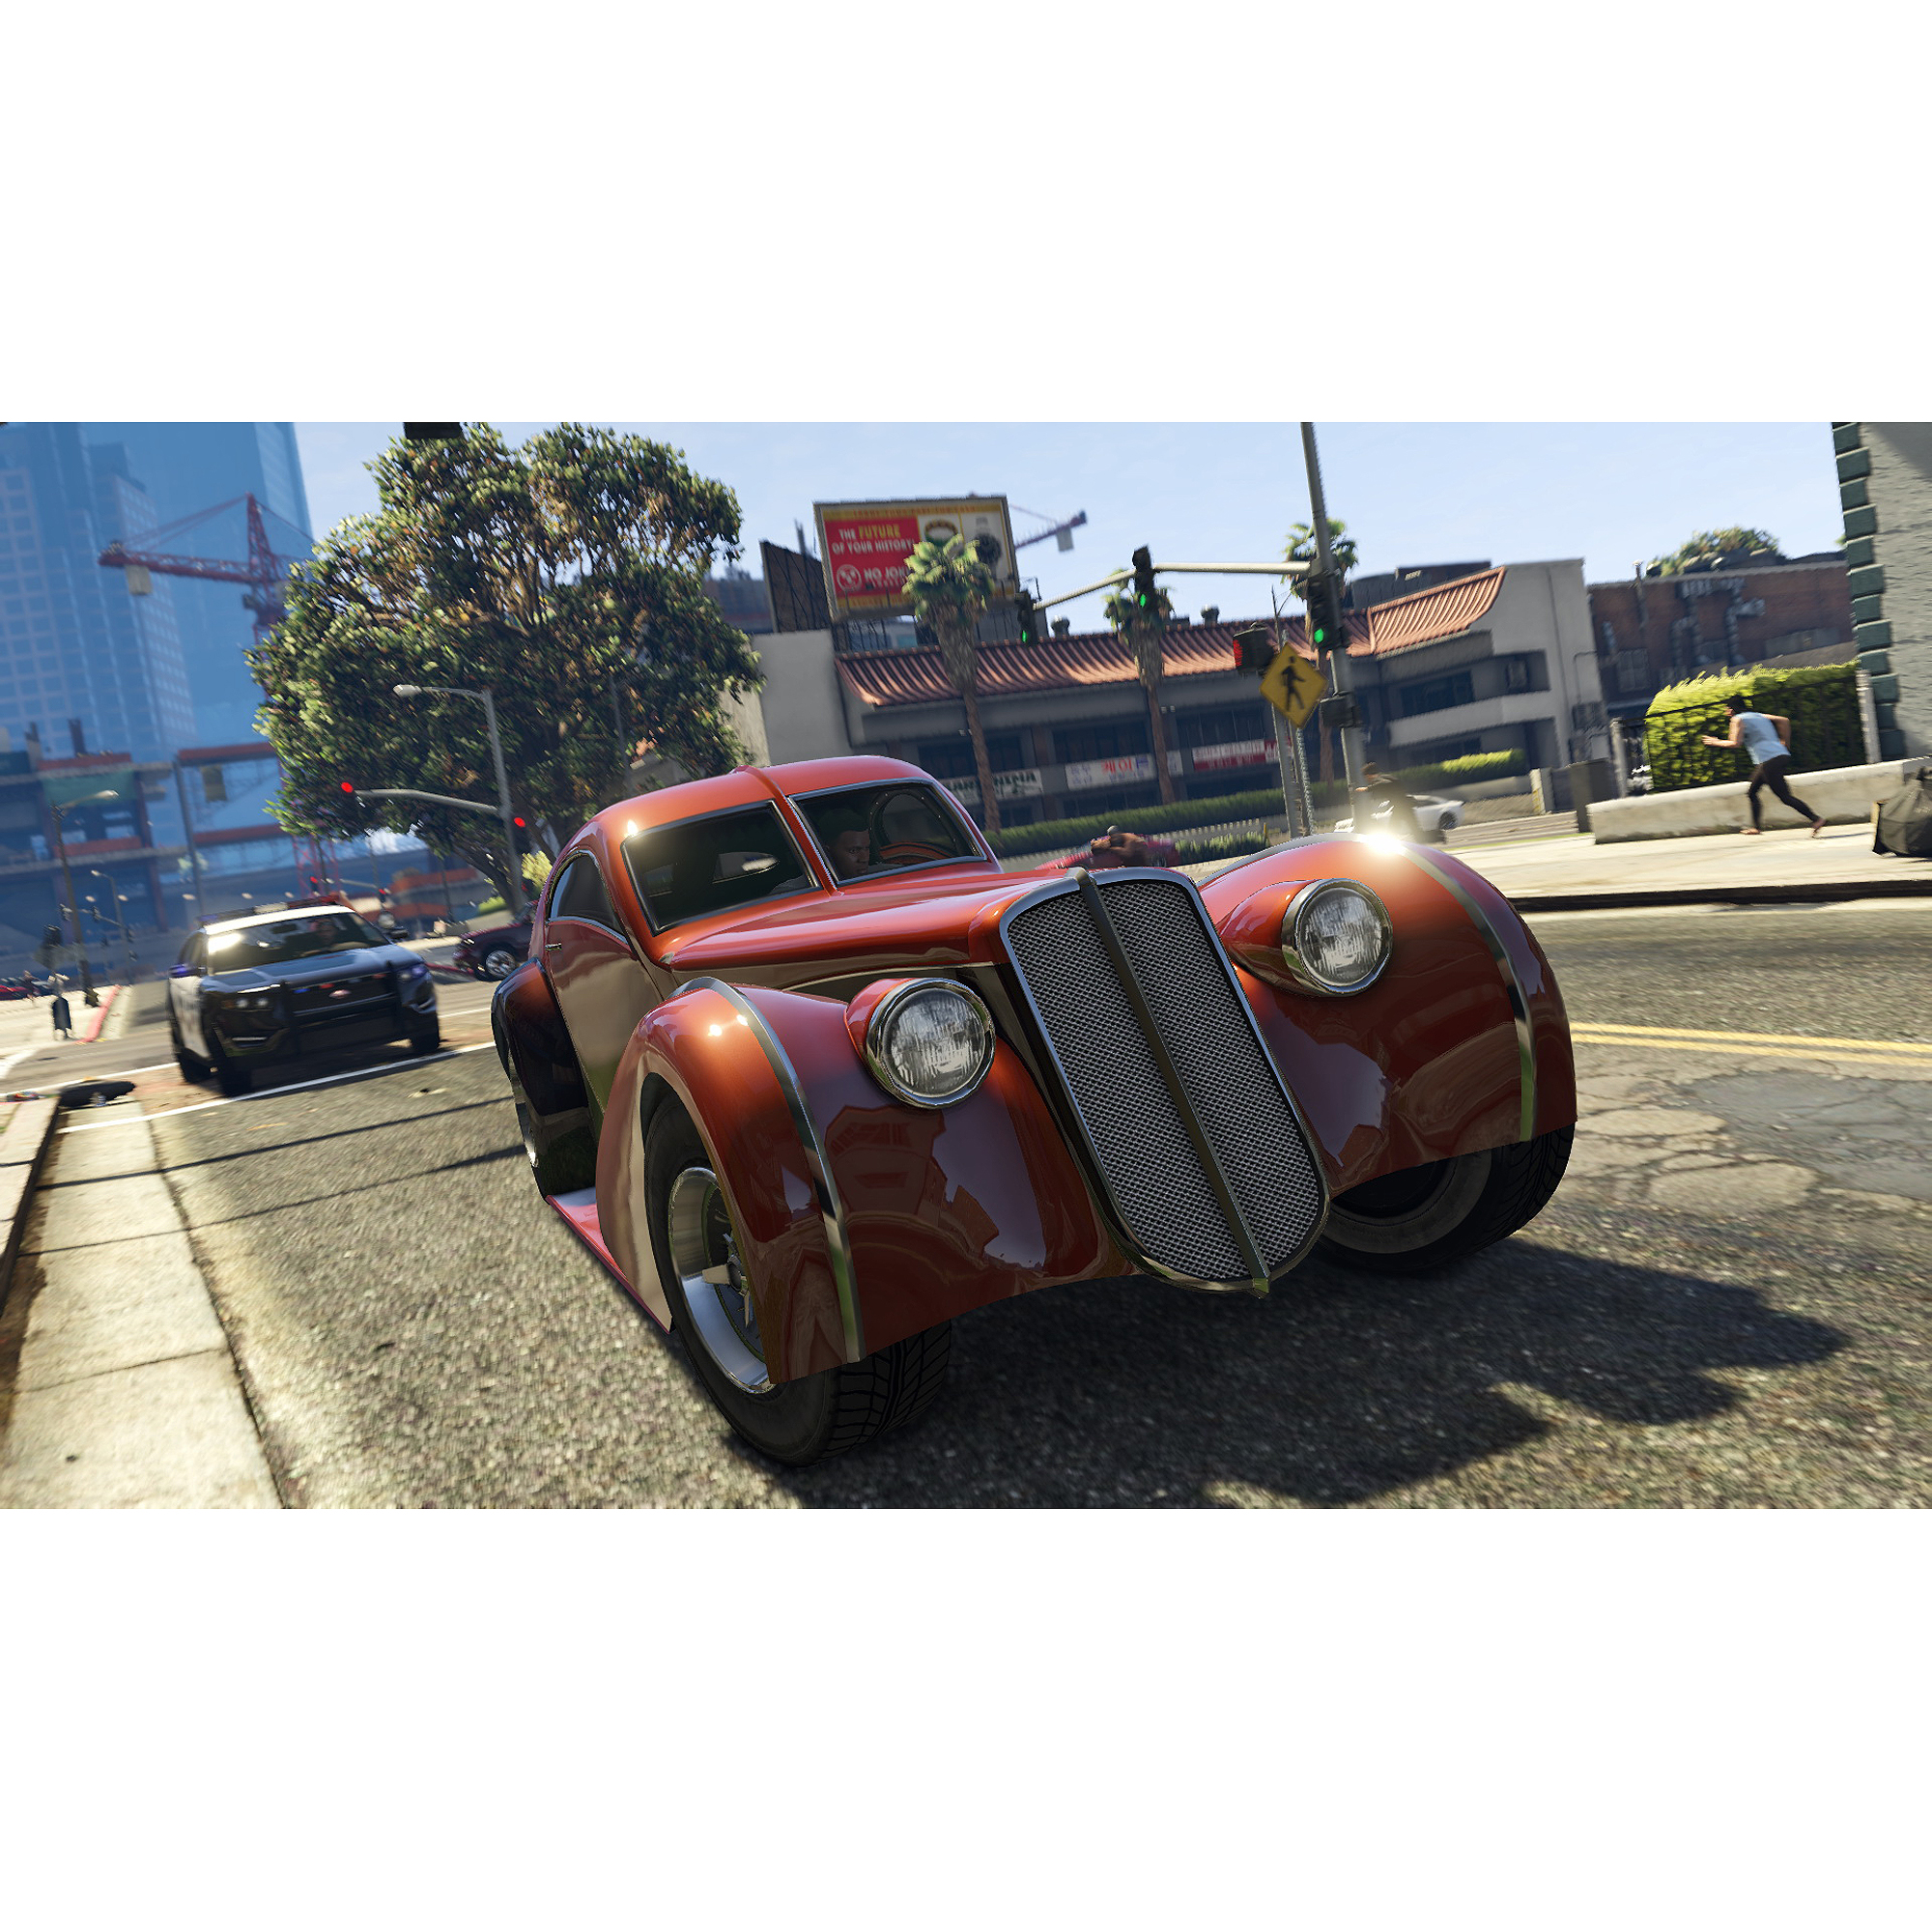 Grand Theft Auto V, Rockstar Games, PlayStation 4 - image 5 of 19